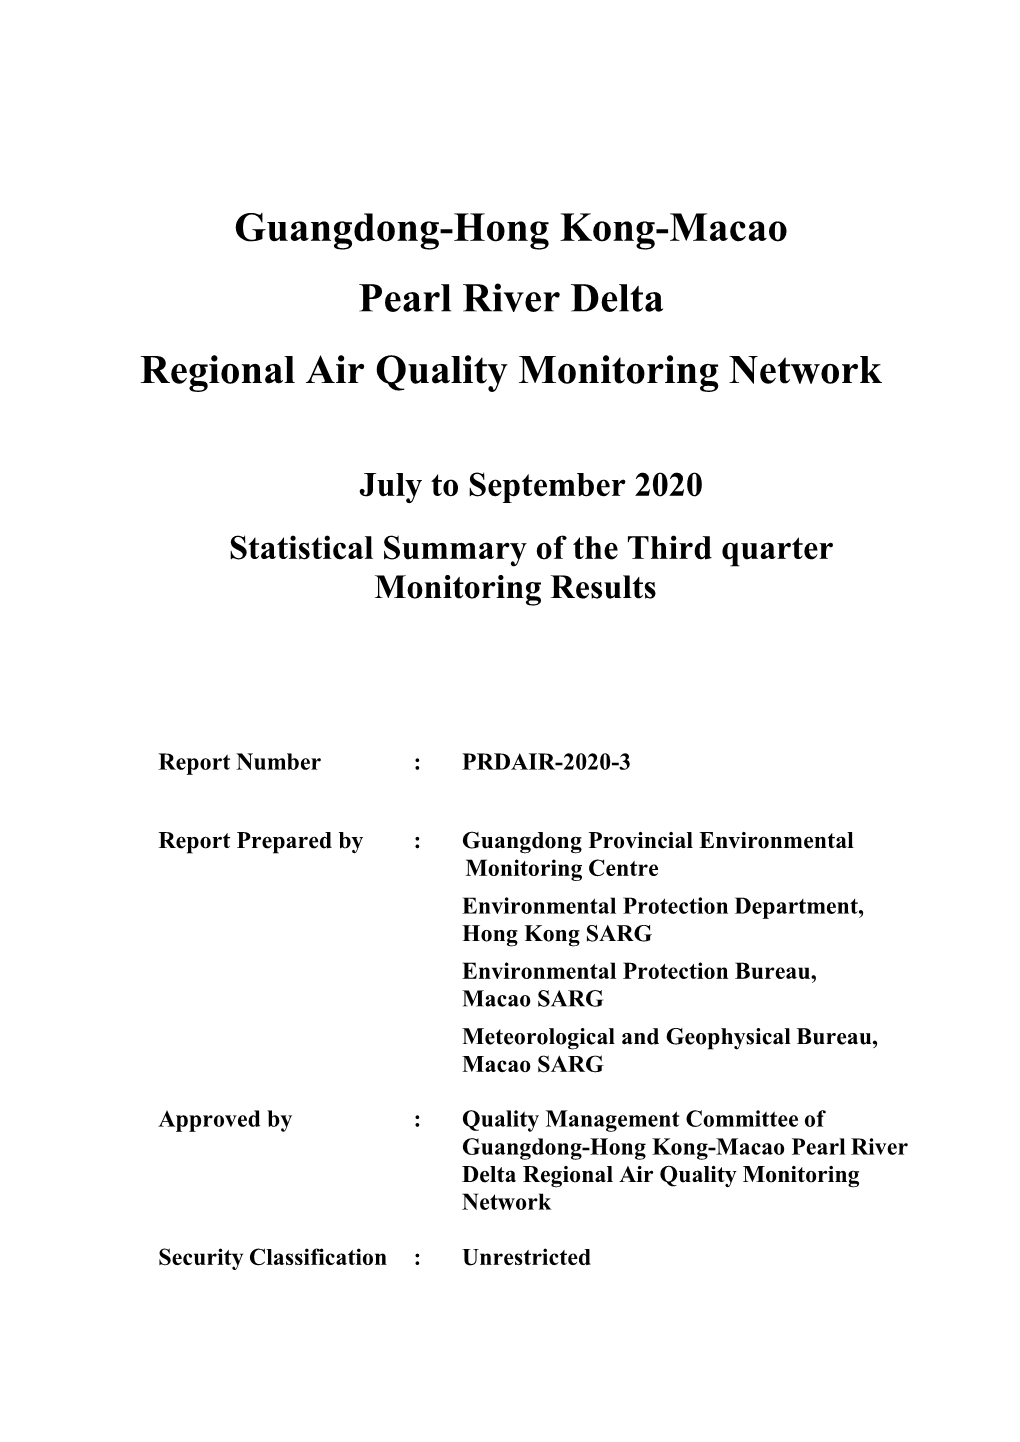 PRD Regional Air Quality Monitoring Network 2020 Third Quarter